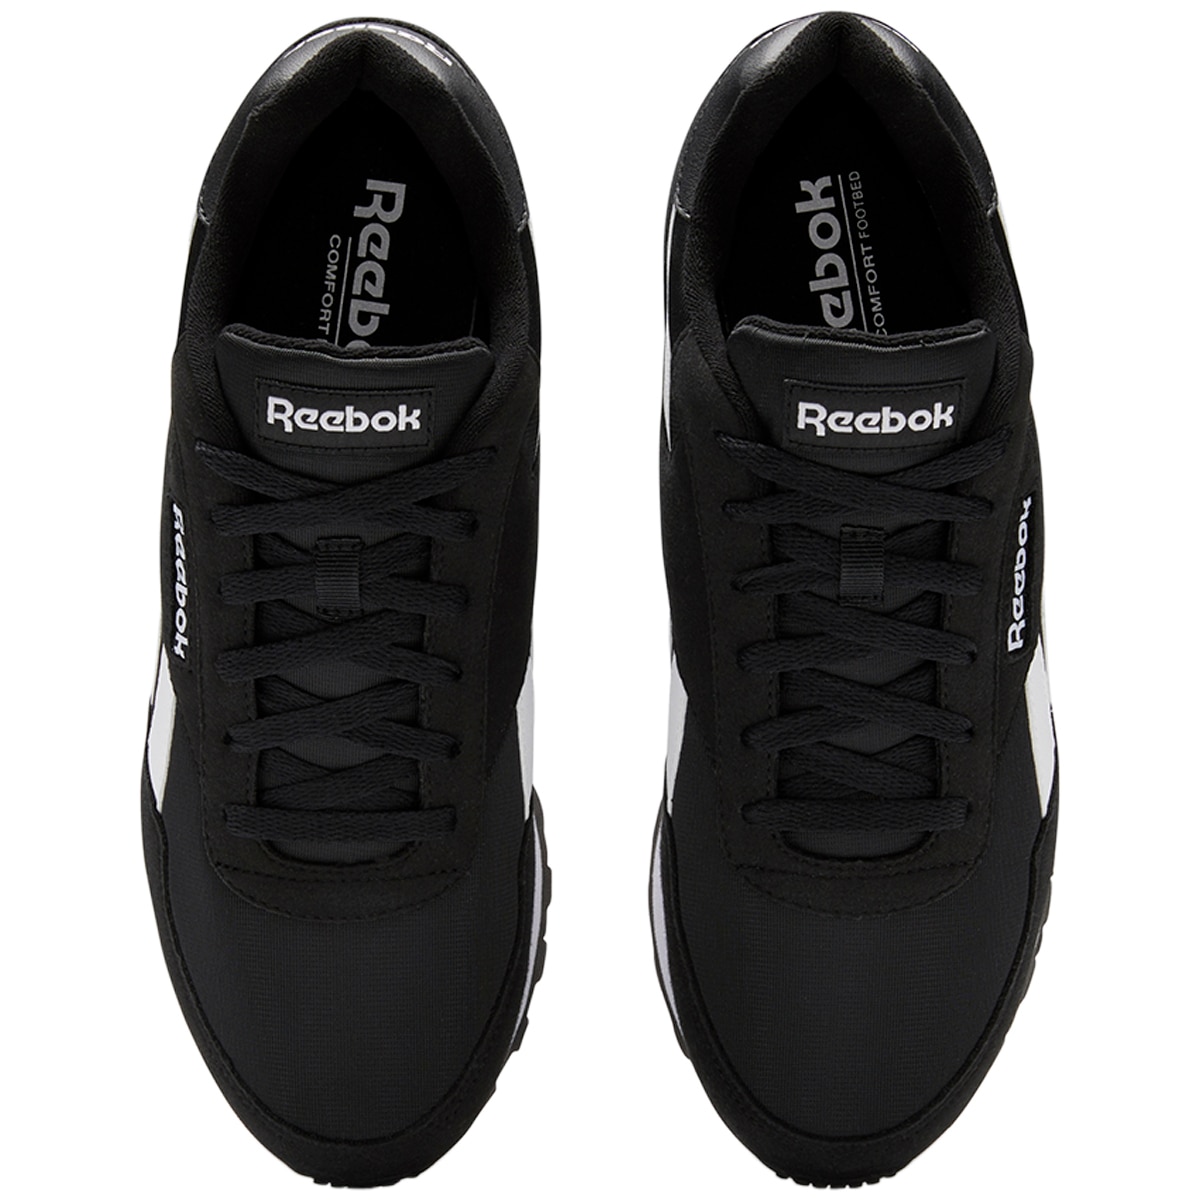 Reebok Rewind shoes - Black